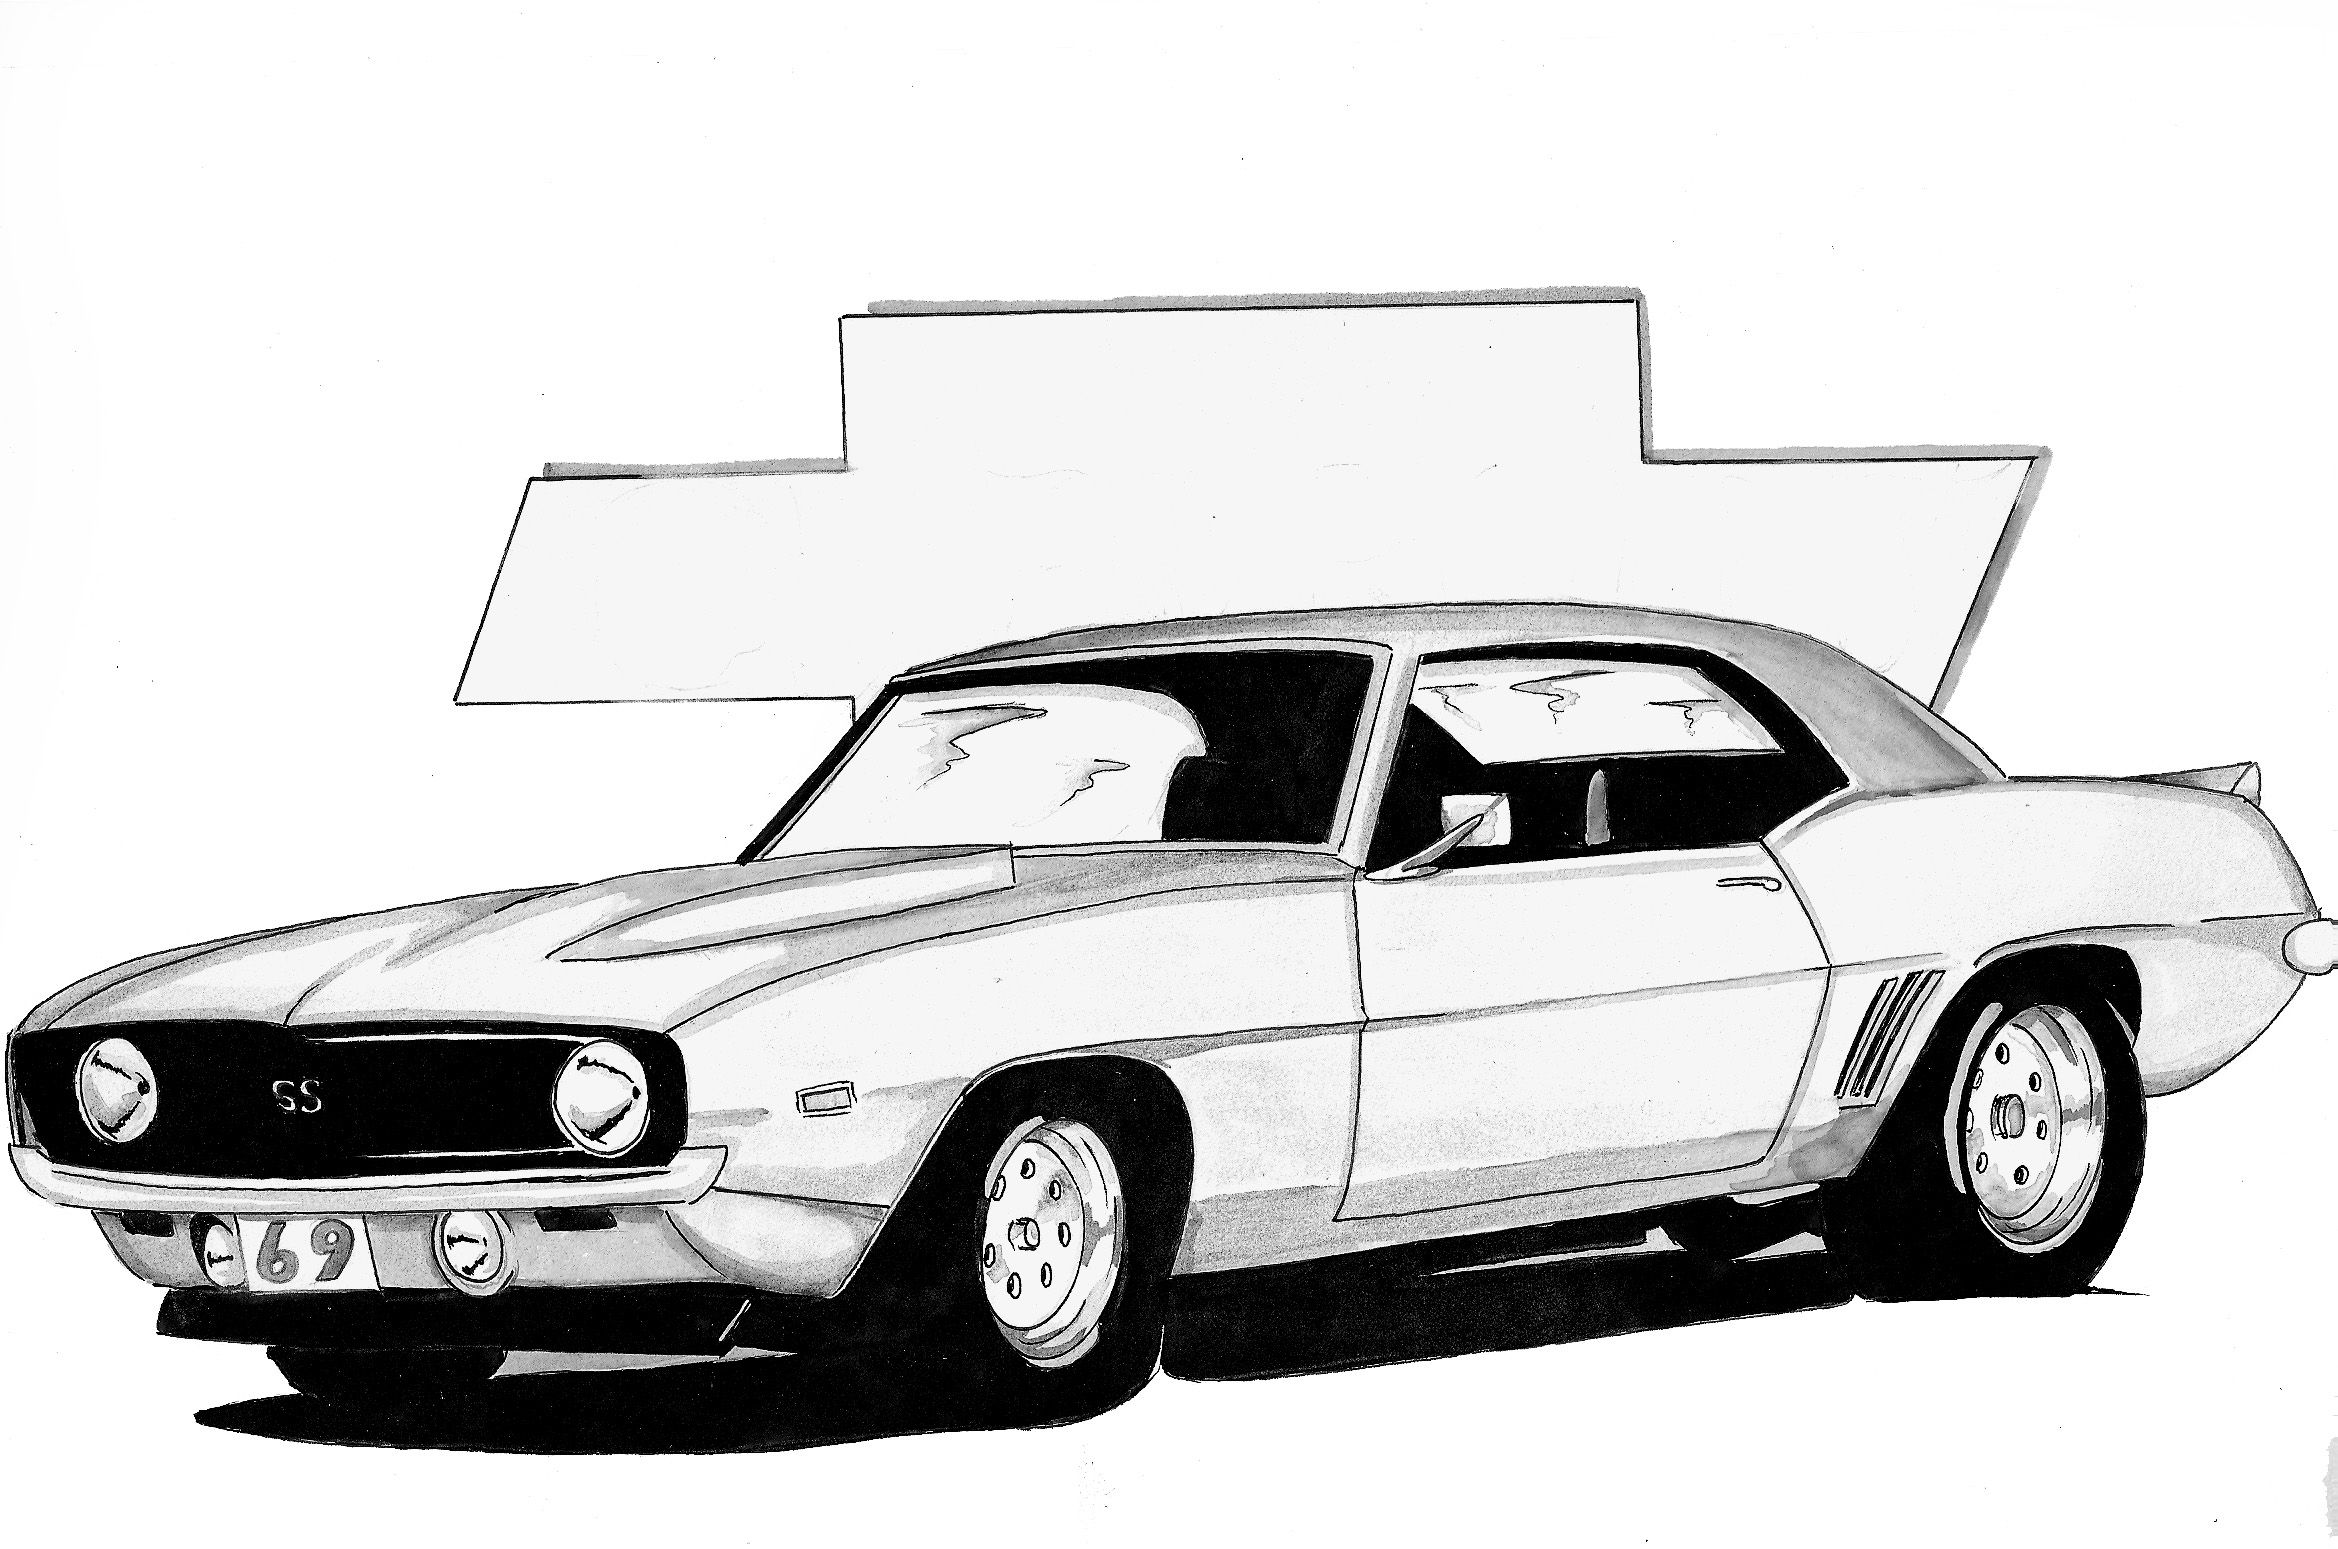 1969 Chevy Camaro Drawing : Camaro 1969 Ss Drawing | Bodaqwasuaq